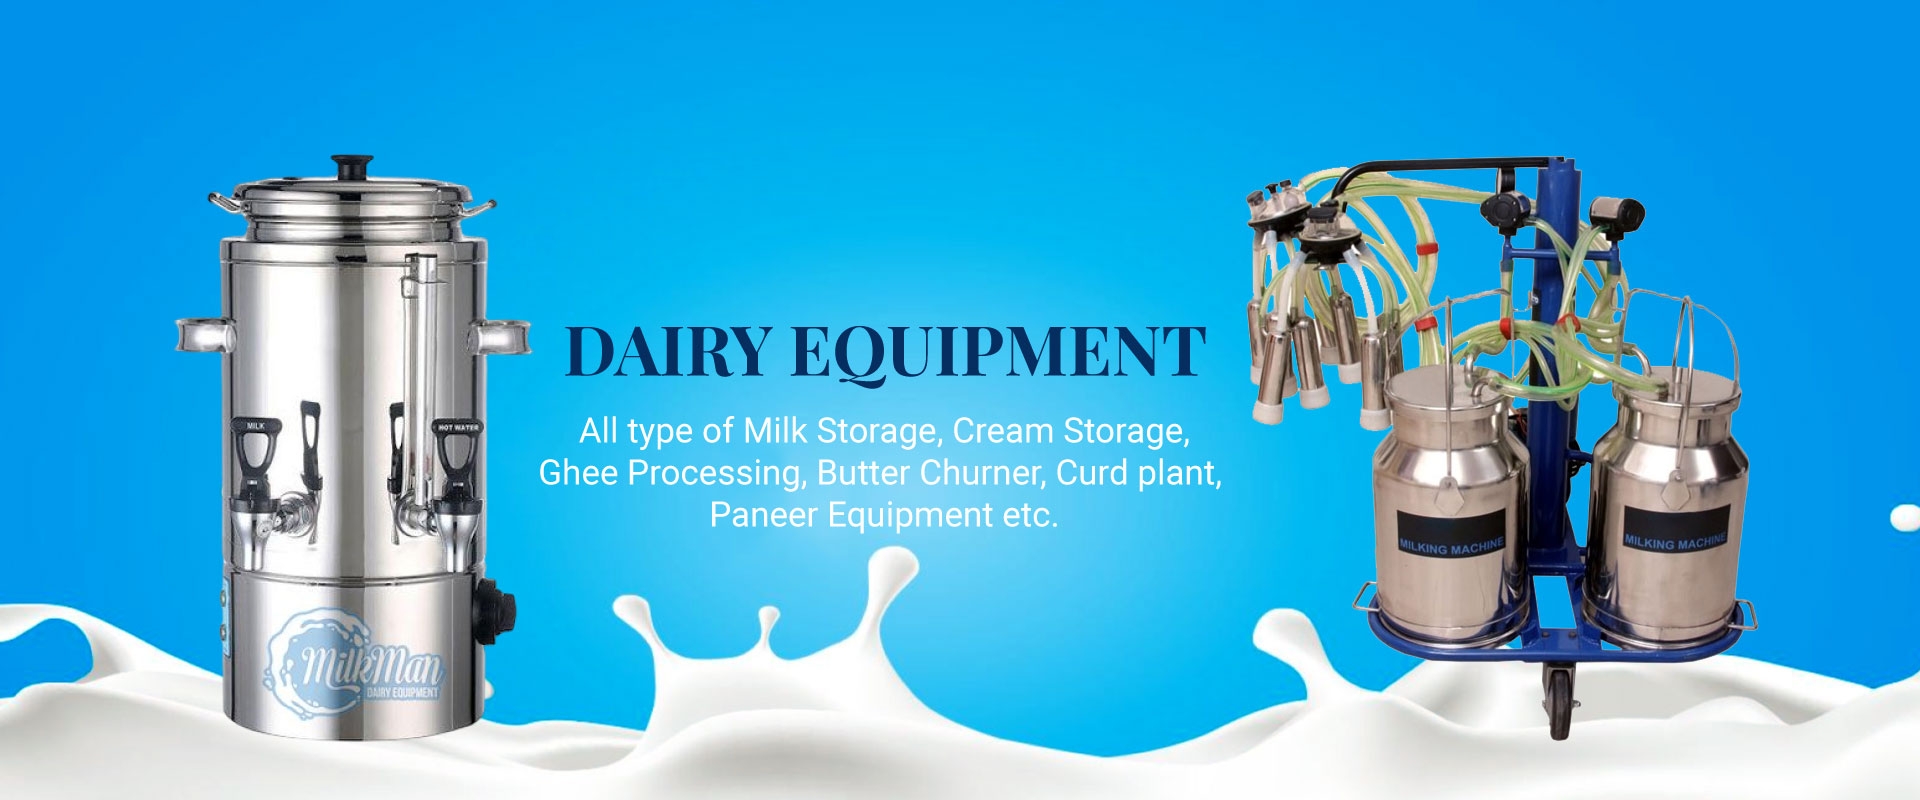 Dairy Equipment in Uganda